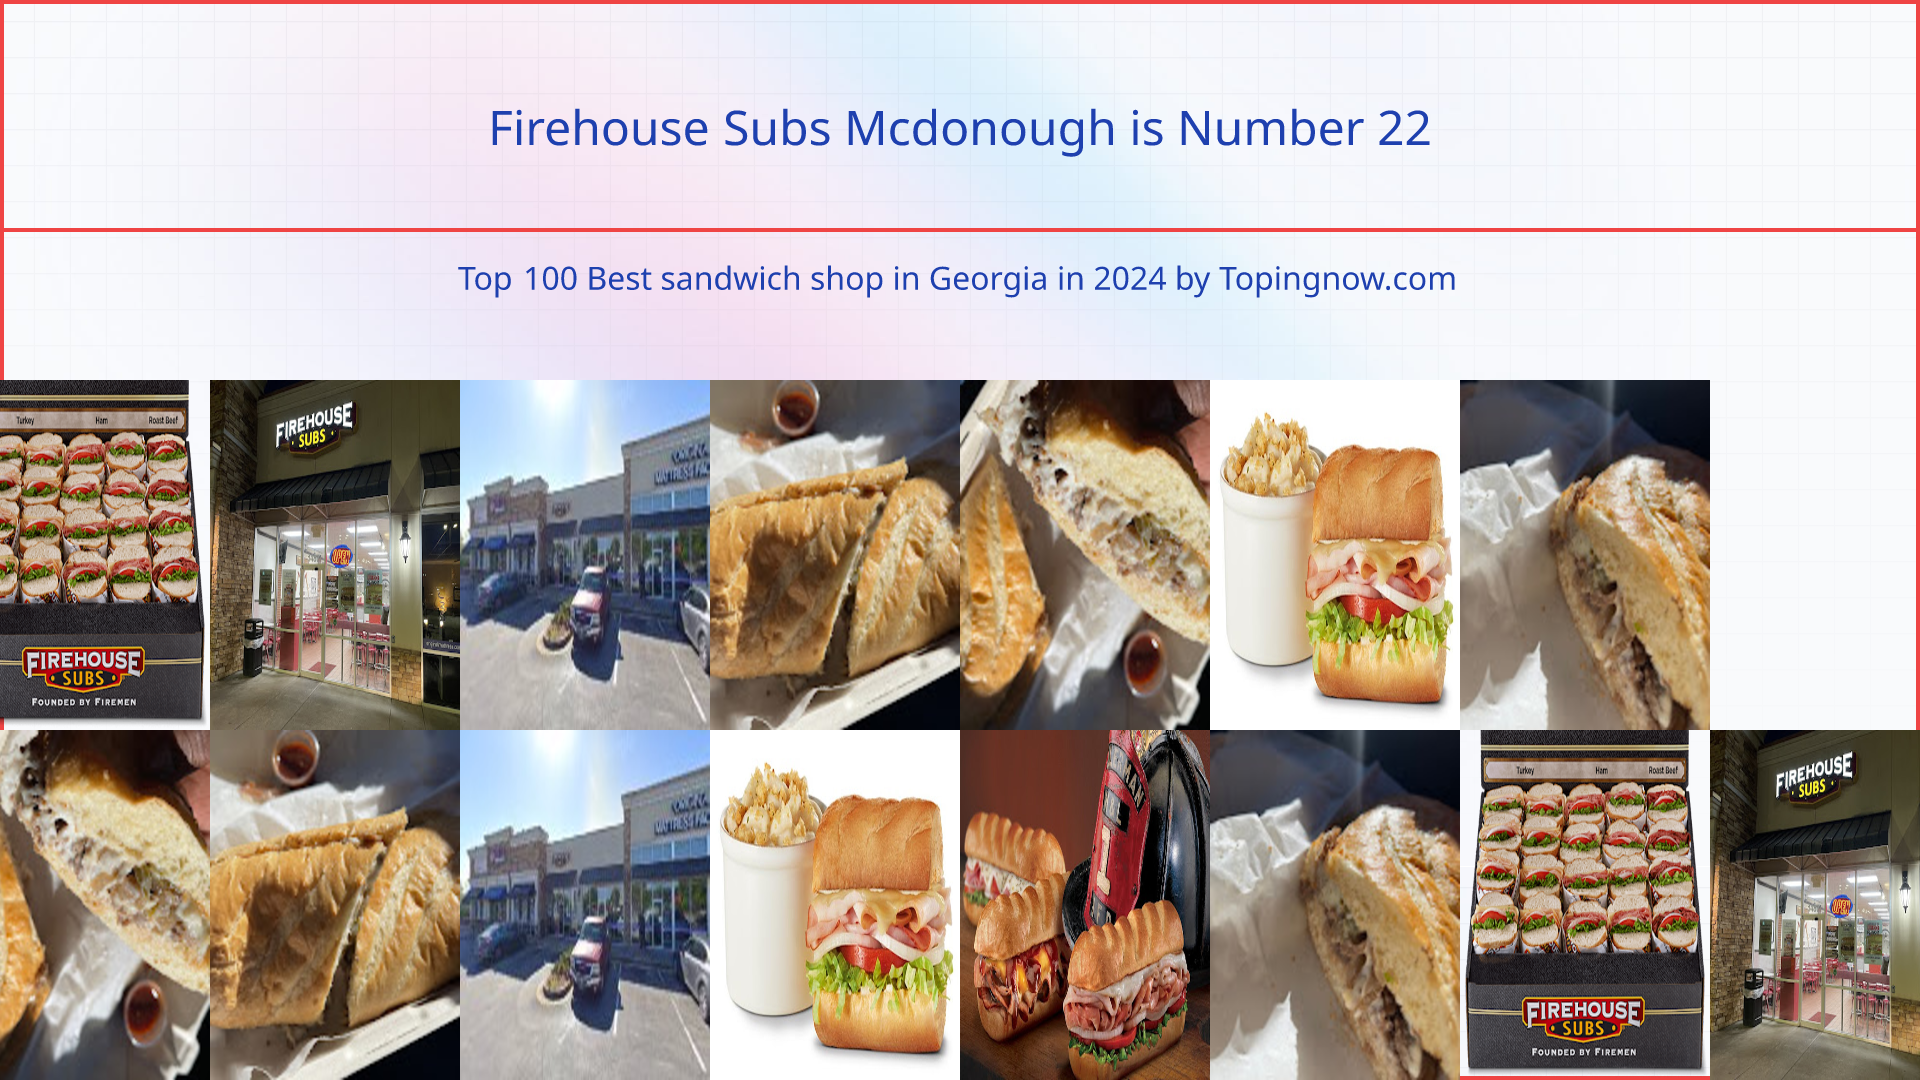 Firehouse Subs Mcdonough: Top 100 Best sandwich shop in Georgia in 2024